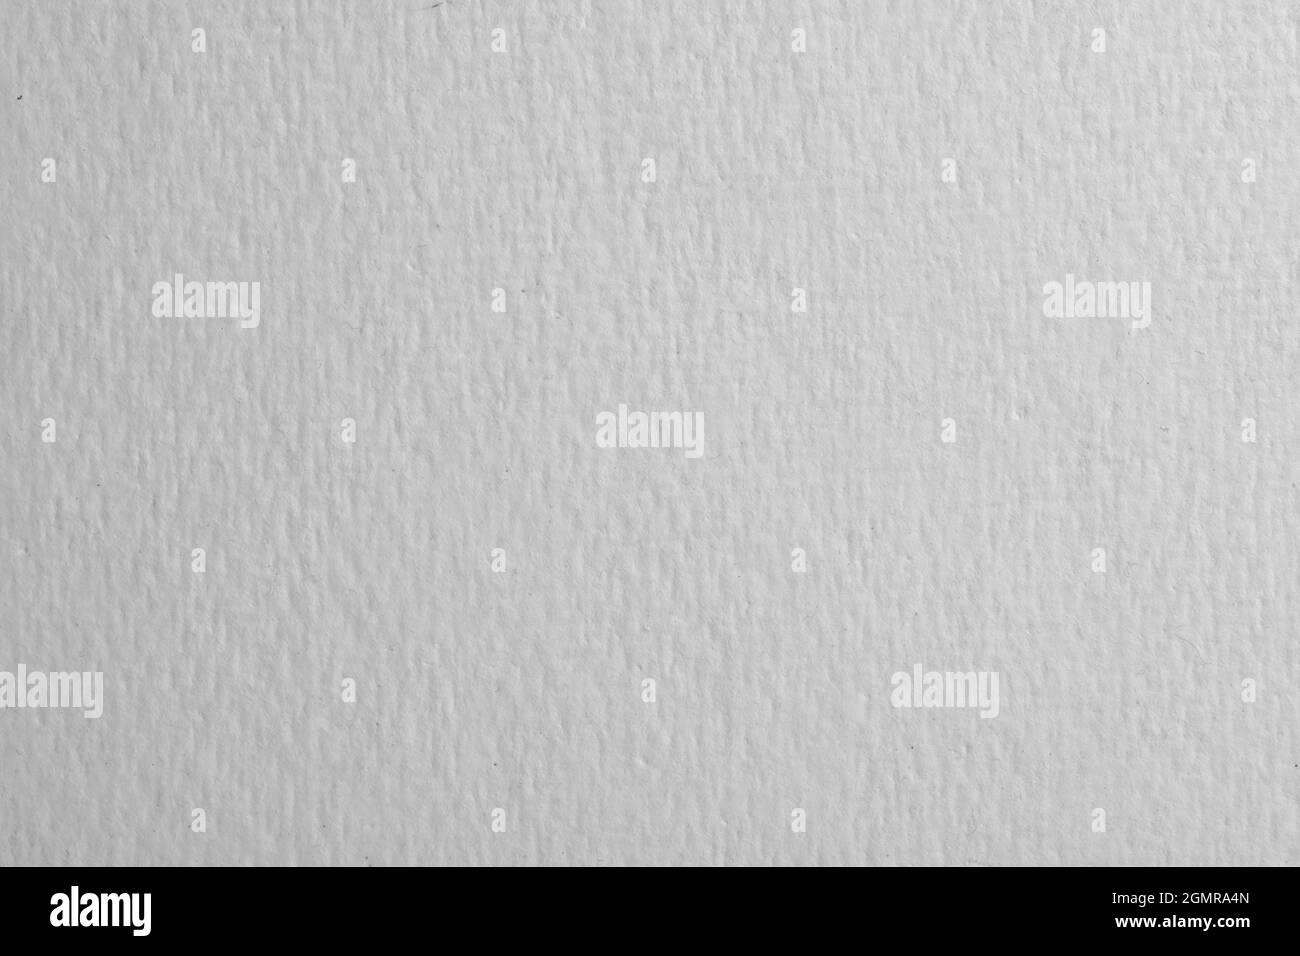 Cotton Paper Texture Stock Photo